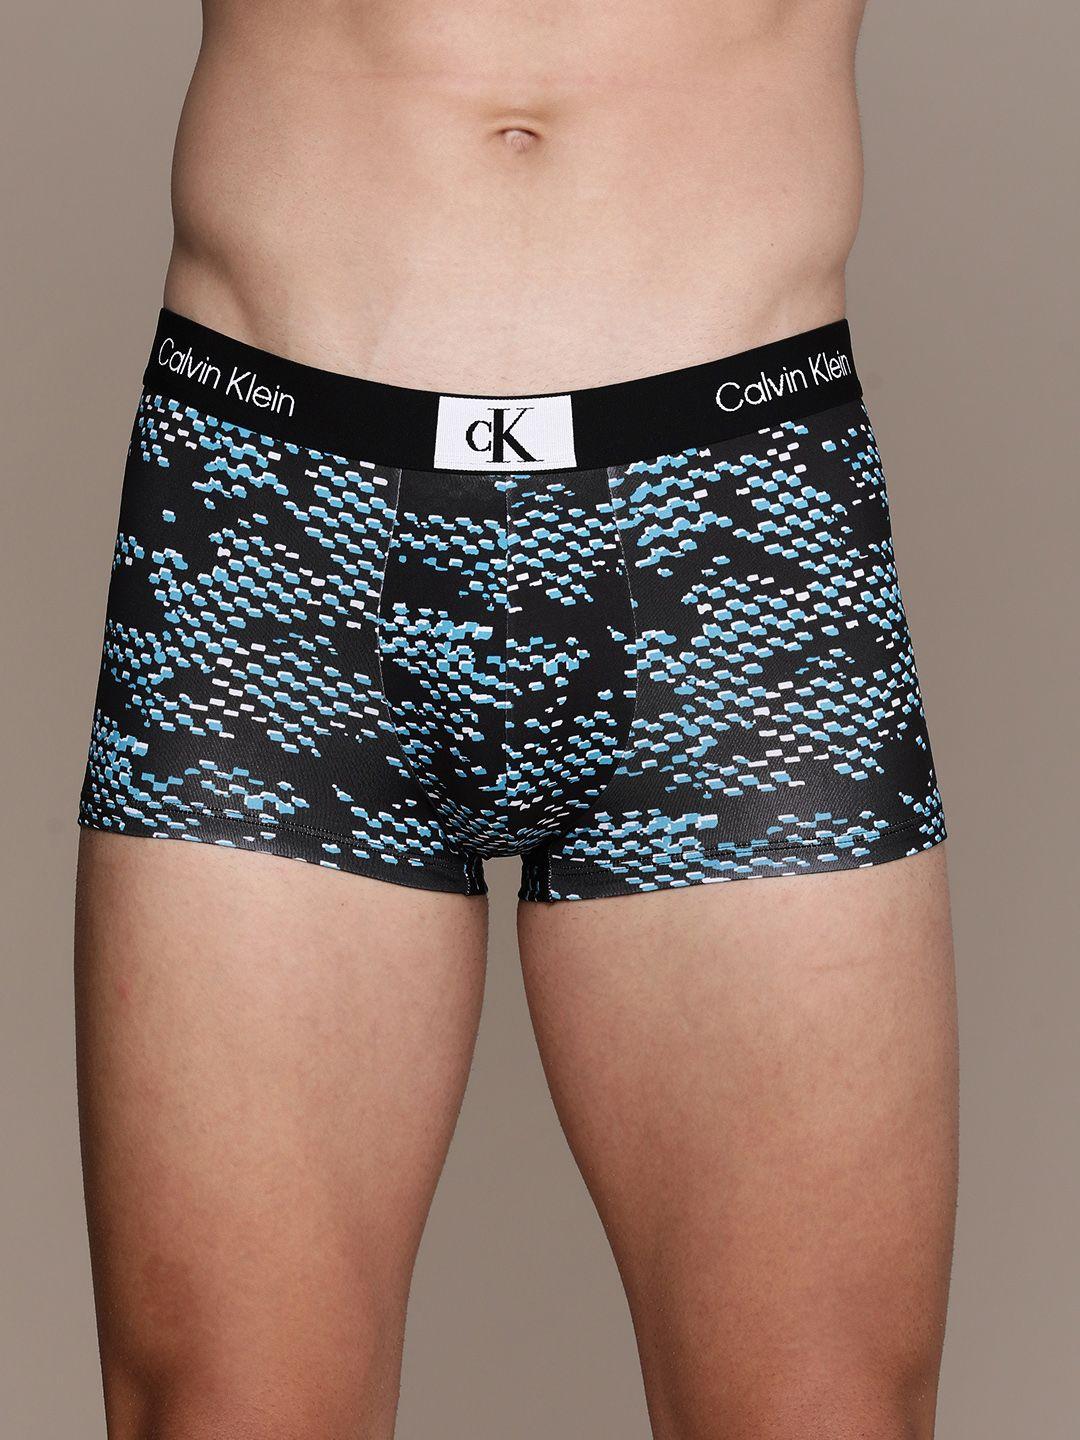 calvin klein underwear men printed low rise trunks nb3406lo9-lo9-black